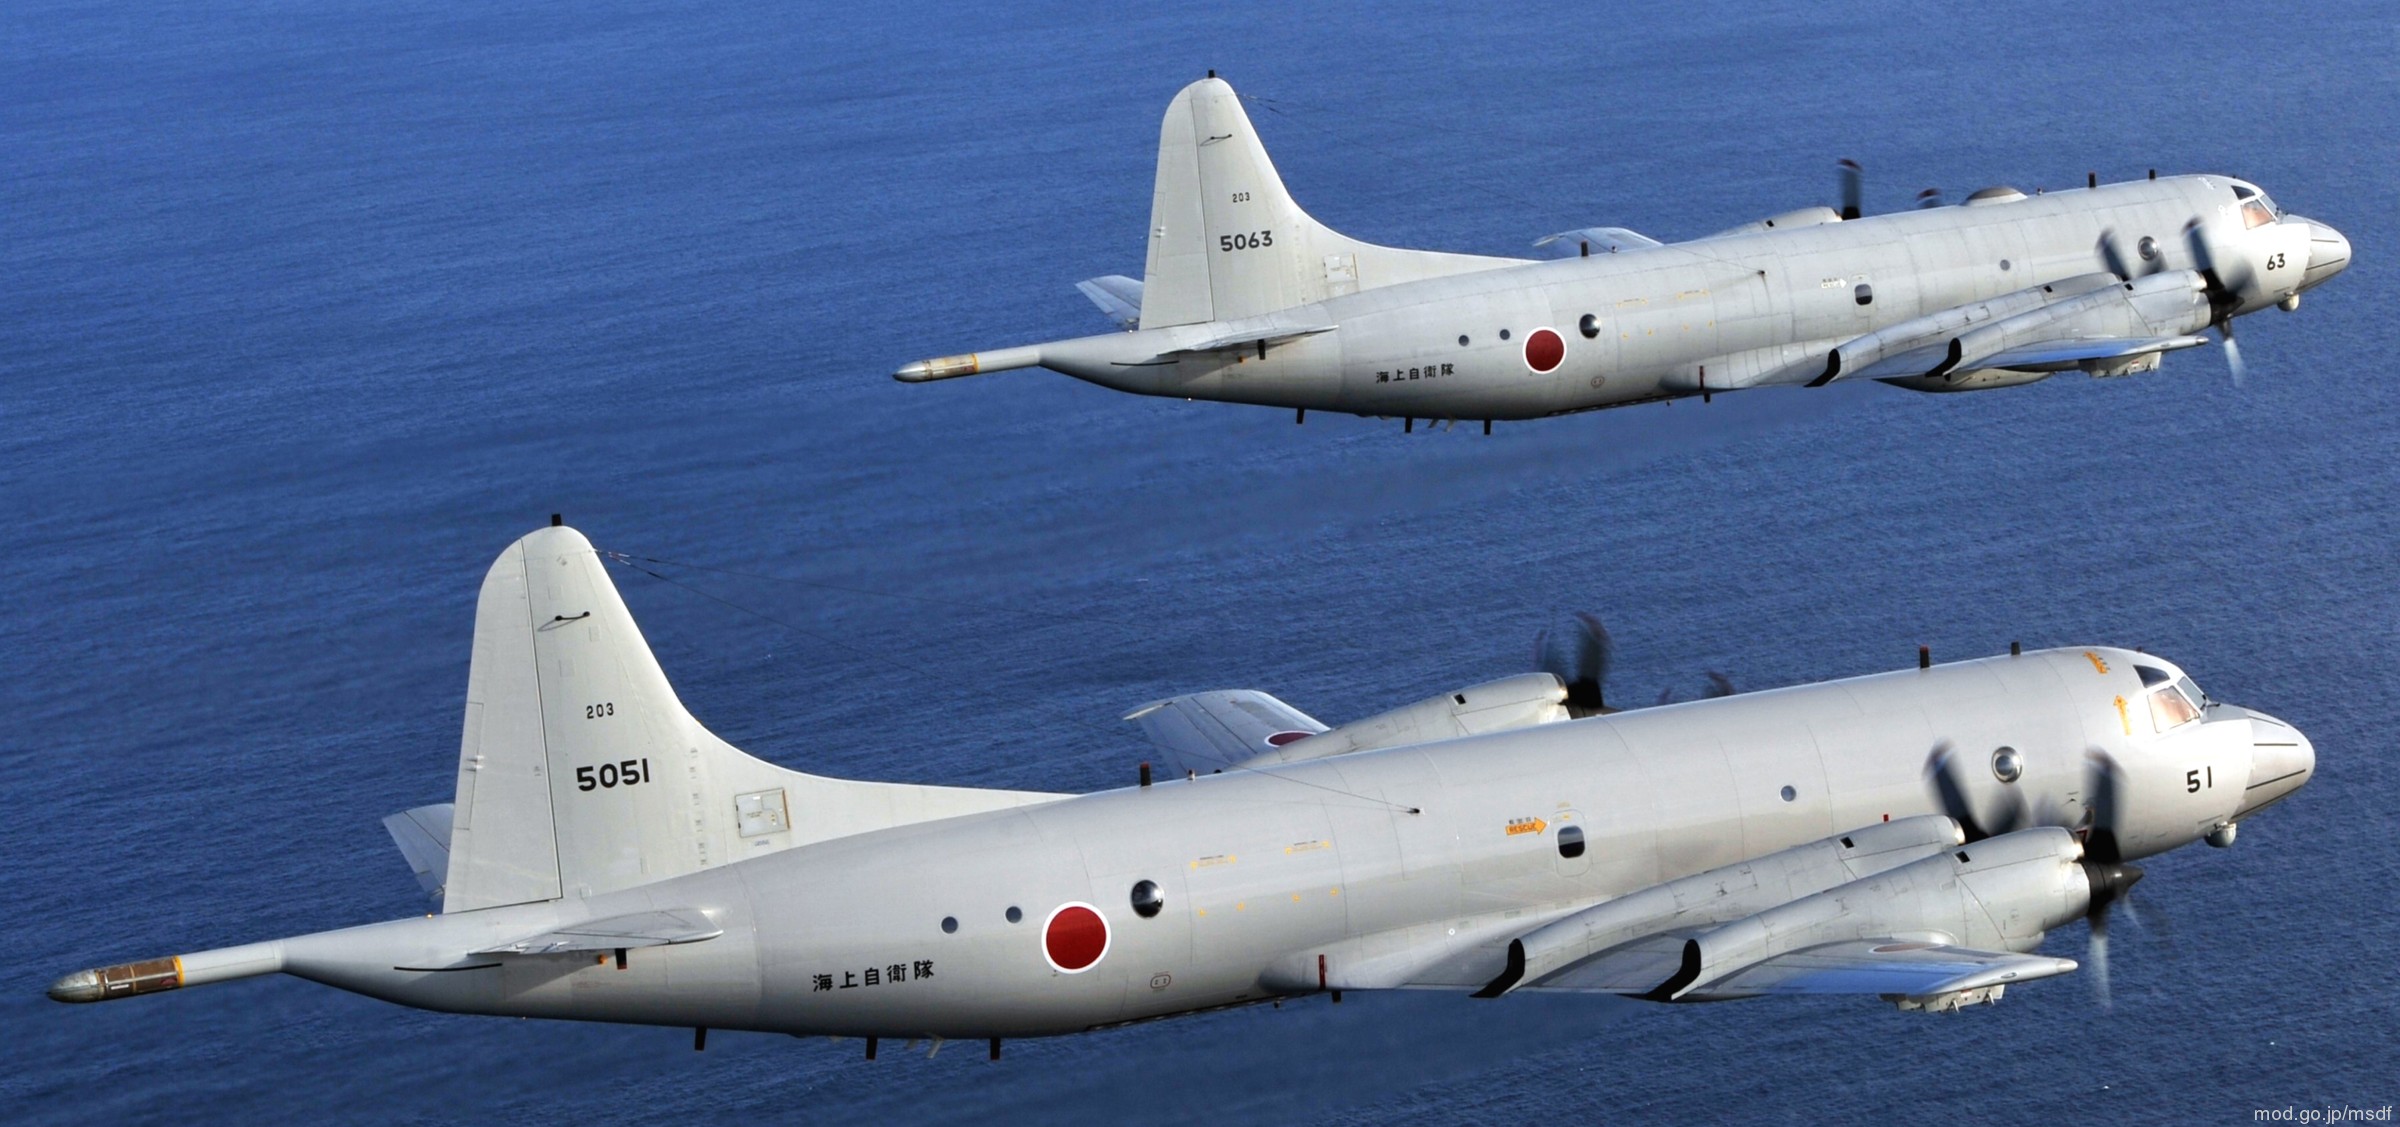 kawasaki p-3c orion patrol aircraft mpa japan maritime self defense force jmsdf 5051 03